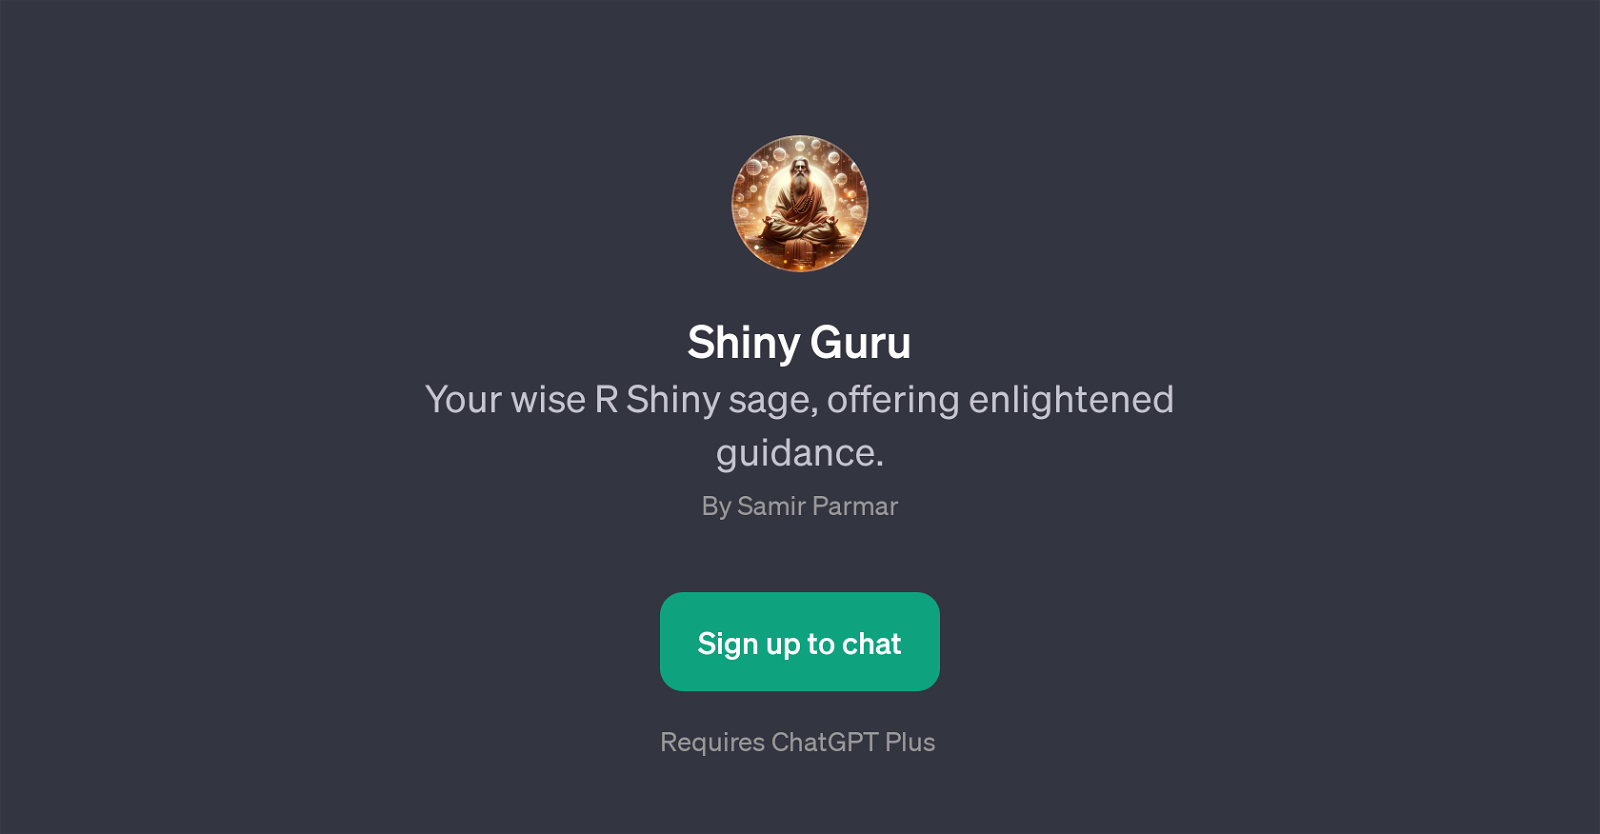 Shiny Guru website